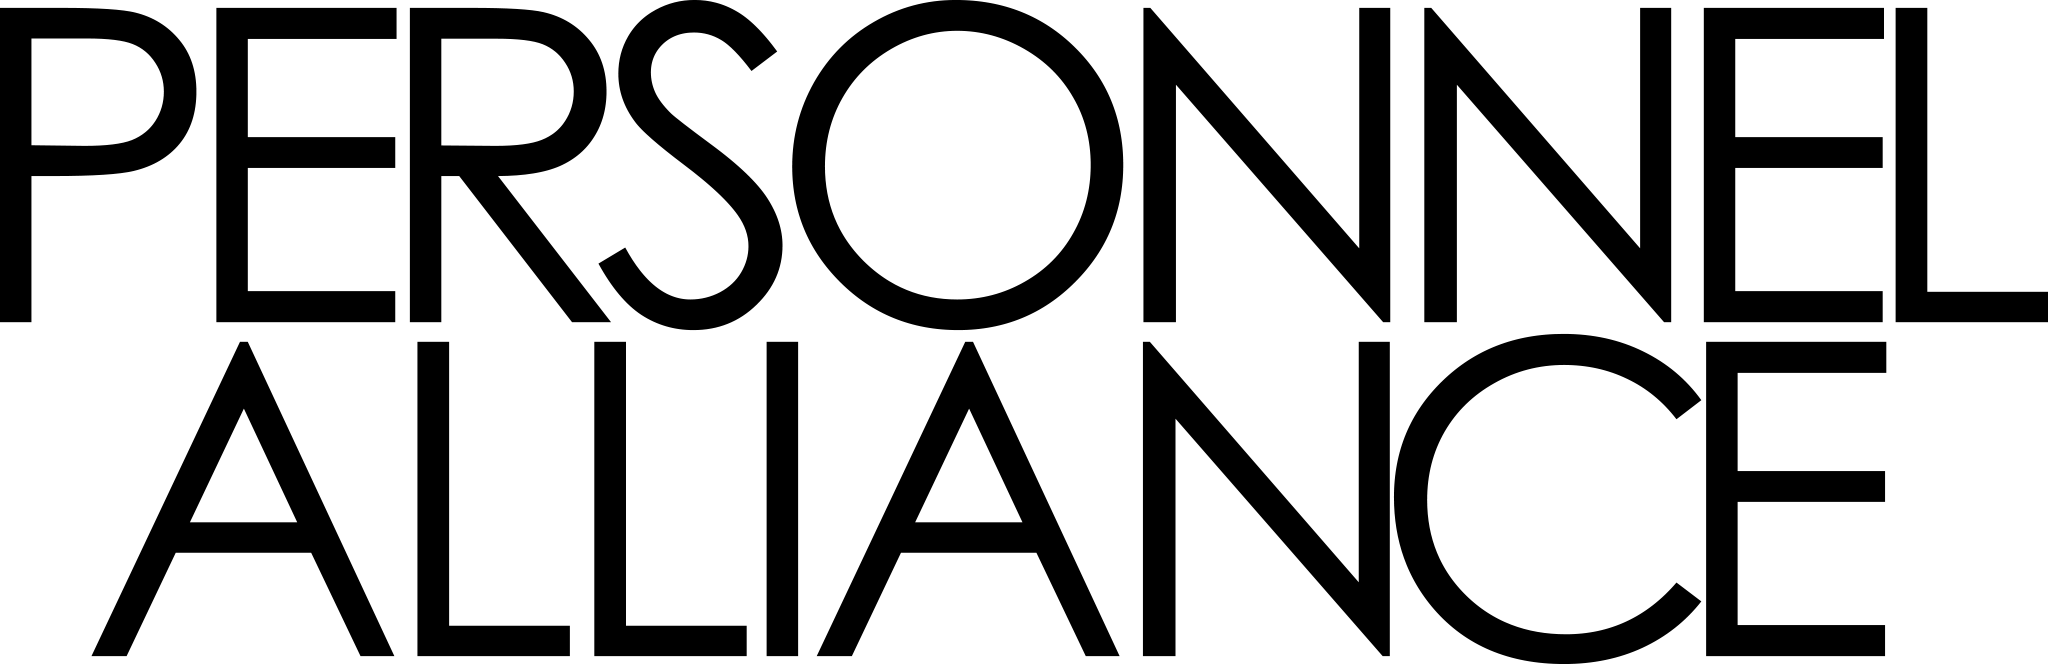 Personnel Alliance GmbH logo